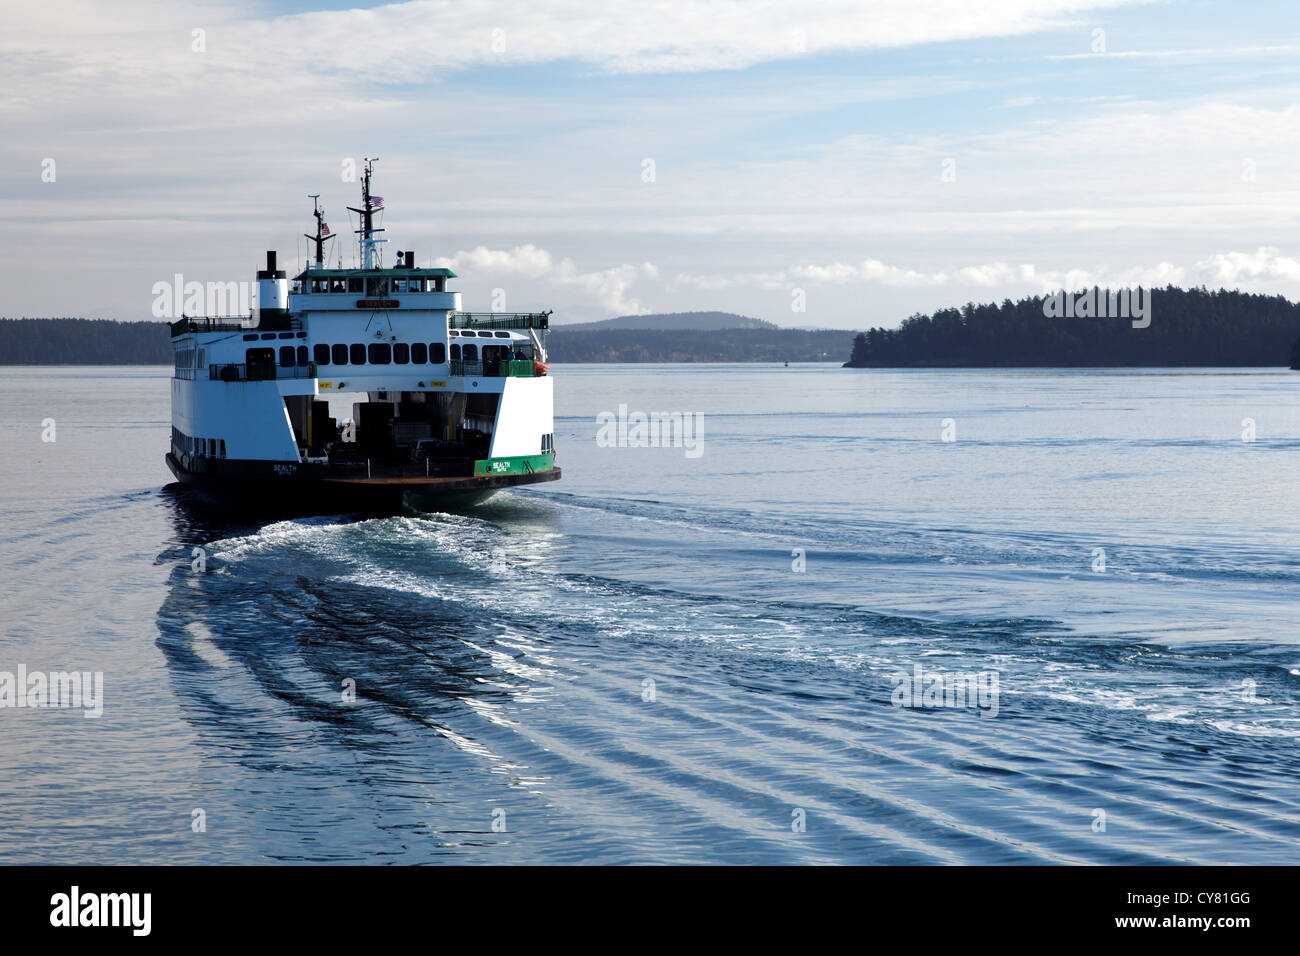 The Washington State Ferry, MV Sealth, cruising through the San Juan Islands, an Juan County, Washington State, USA Stock Photo